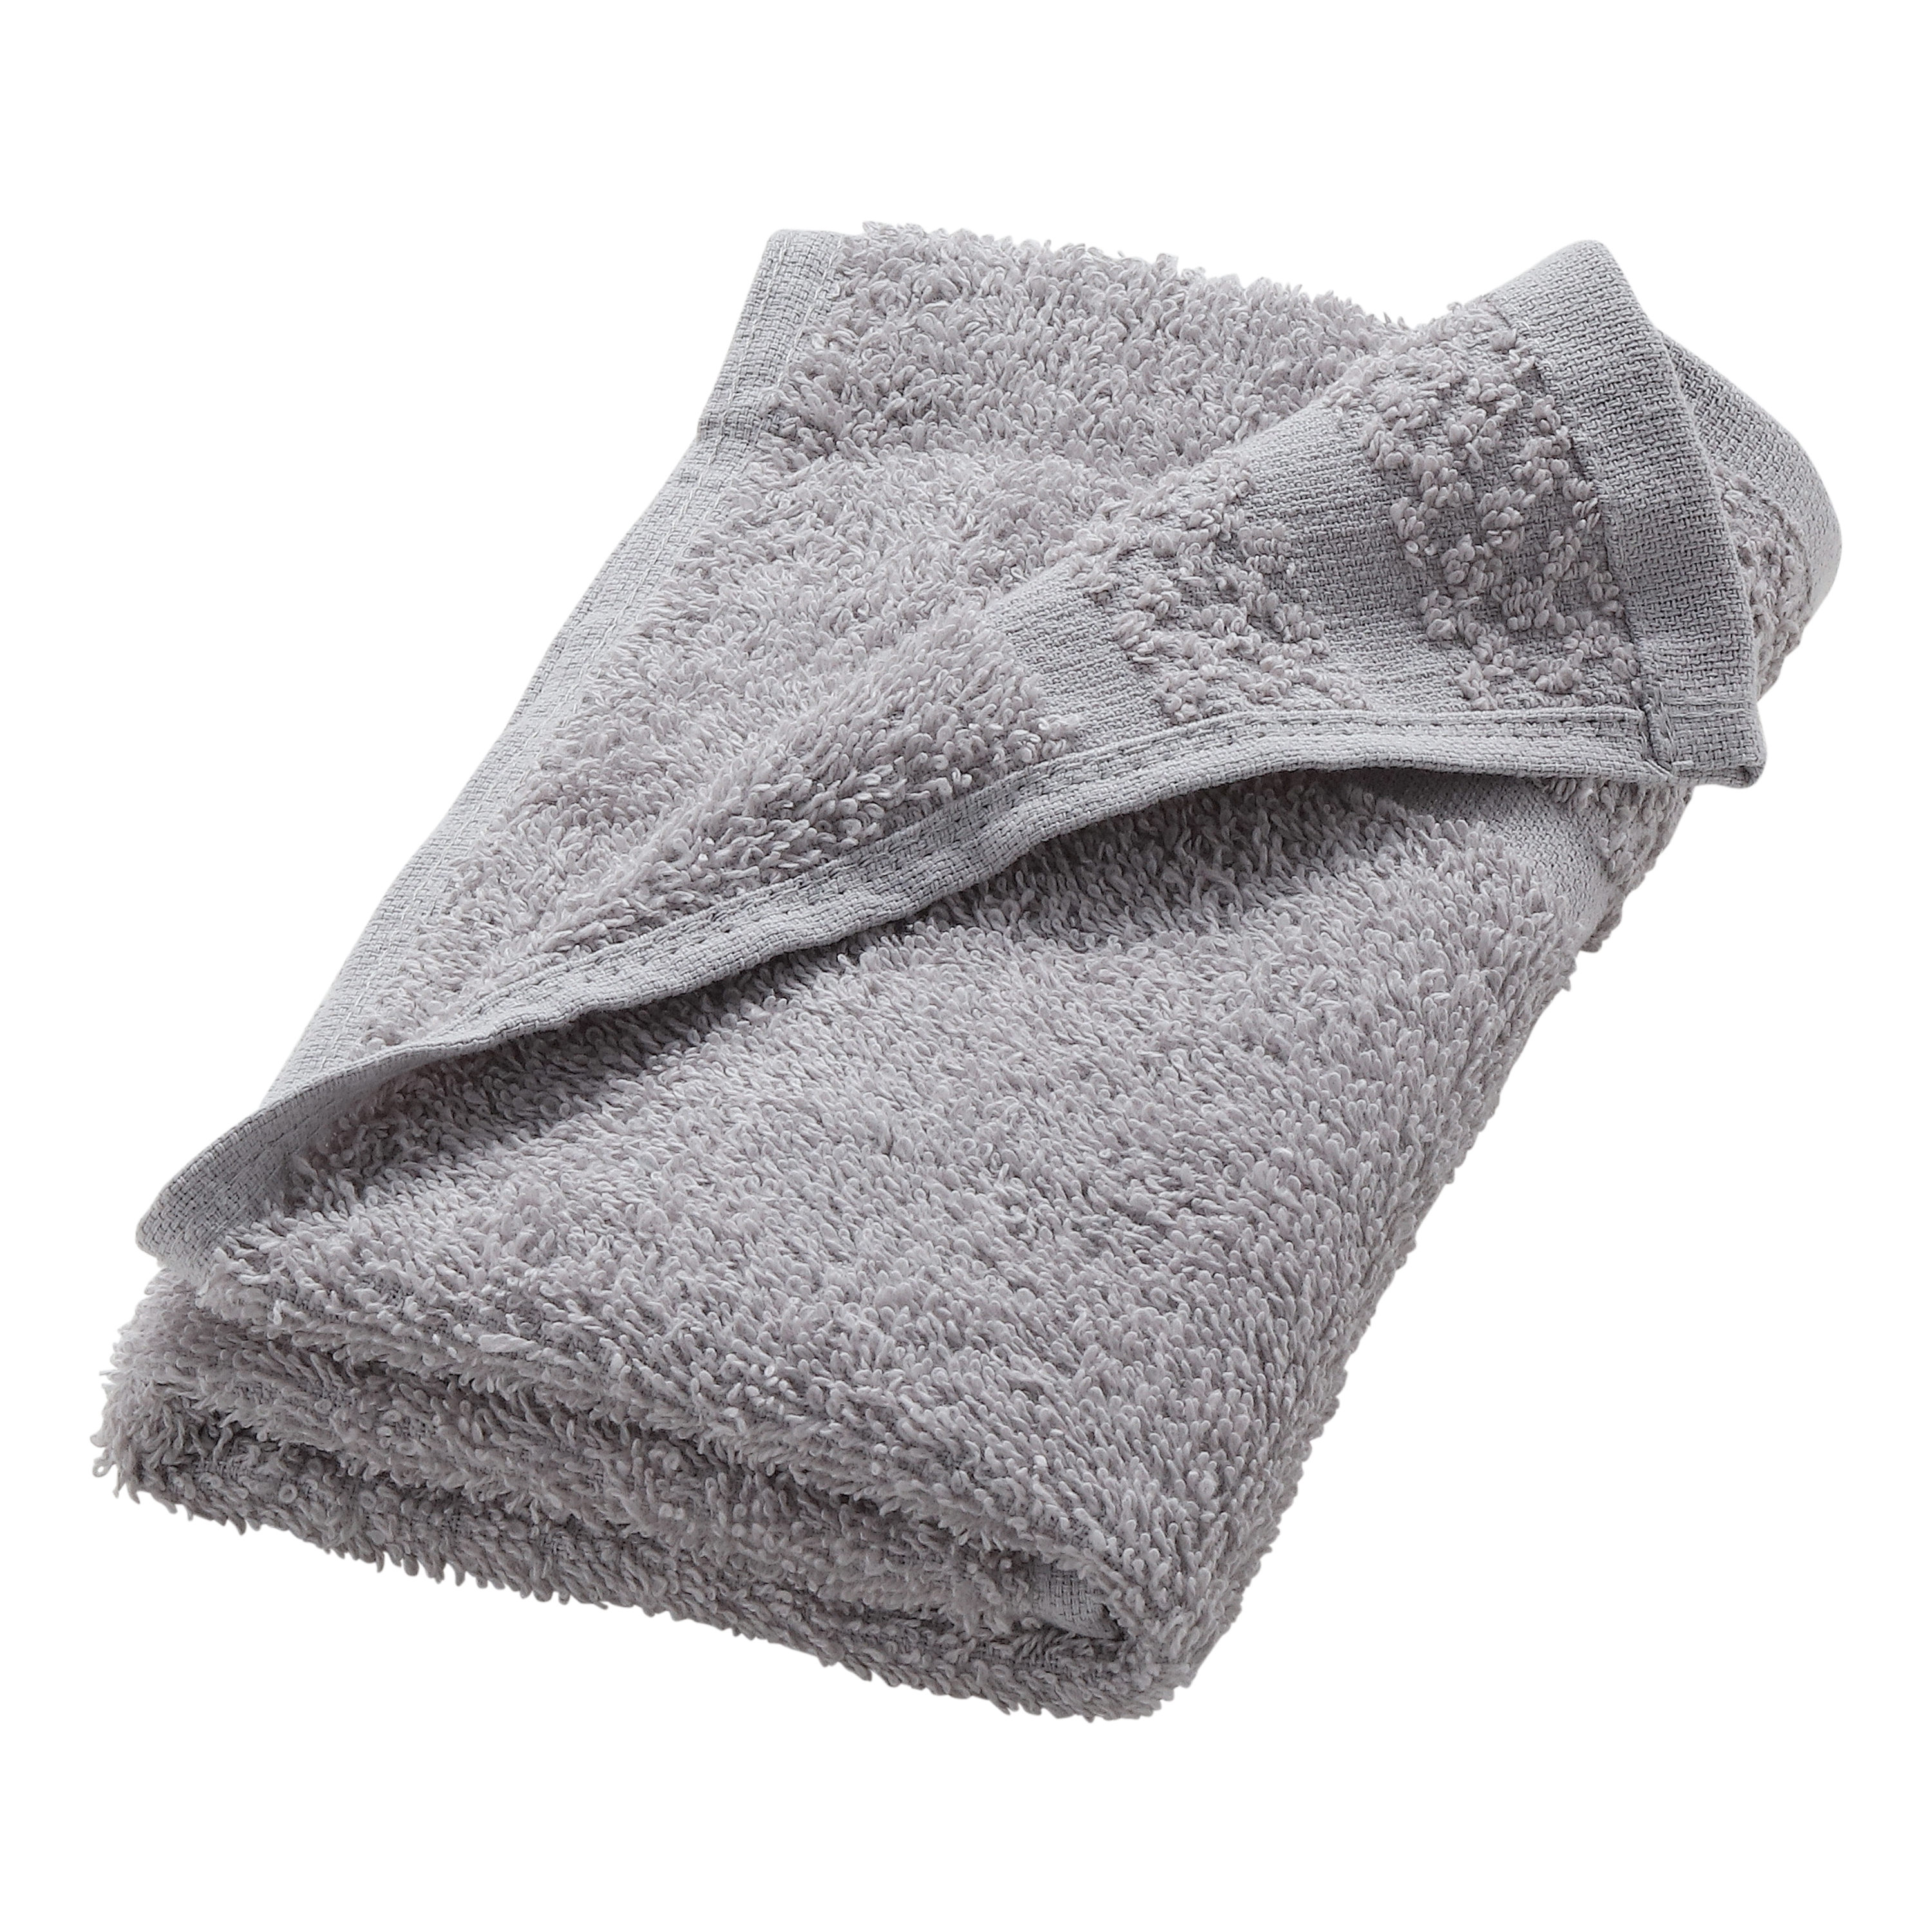 Mainstays 10 Piece Bath Towel Set with Upgraded Softness & Durability, Gray - image 2 of 7